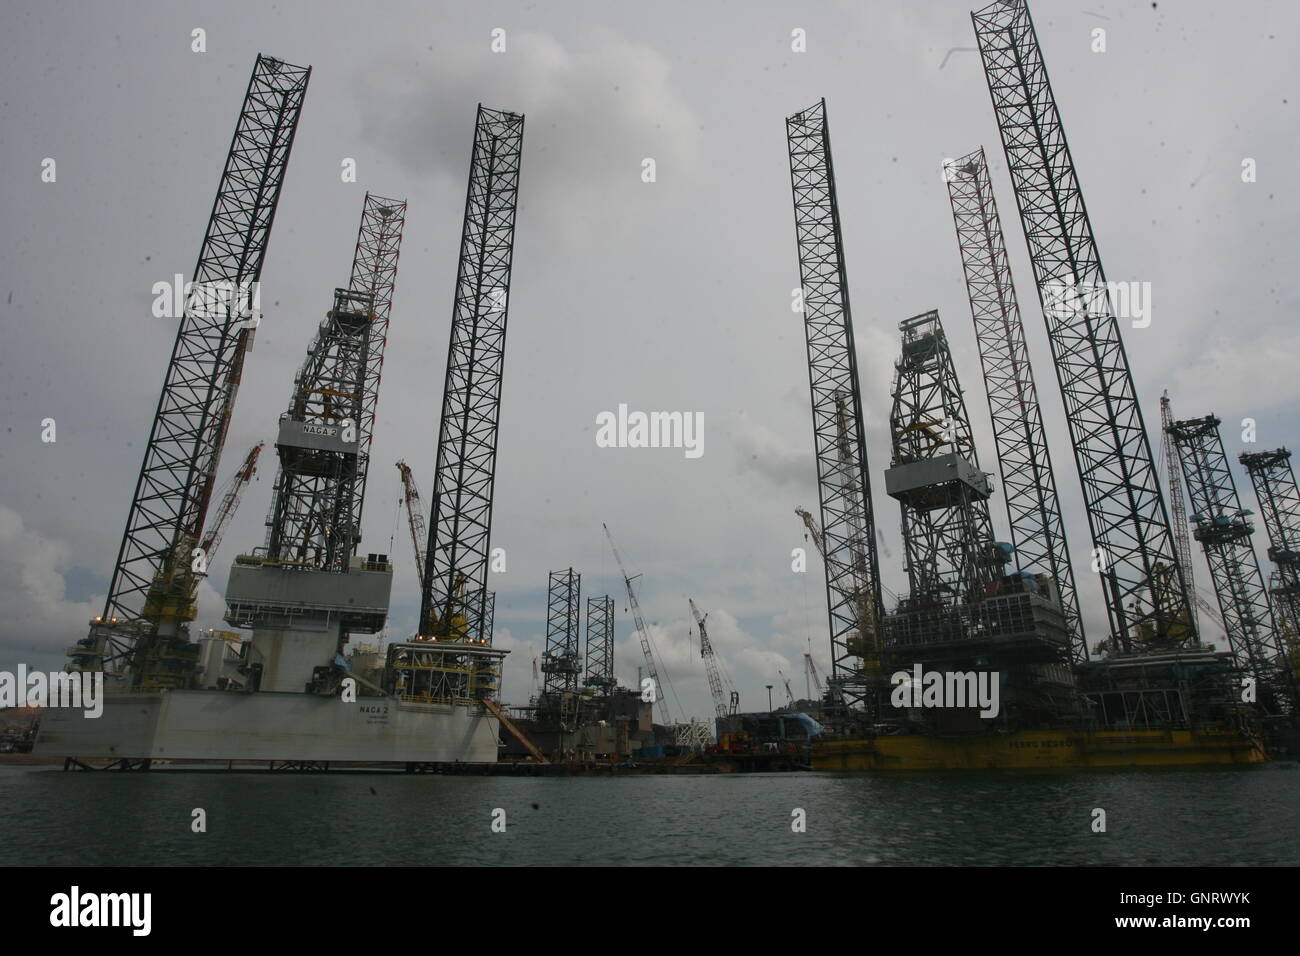 Oil platform factory in Batam, Indonesia. Photo by Yuli Seperi/Alamy Stock Photo